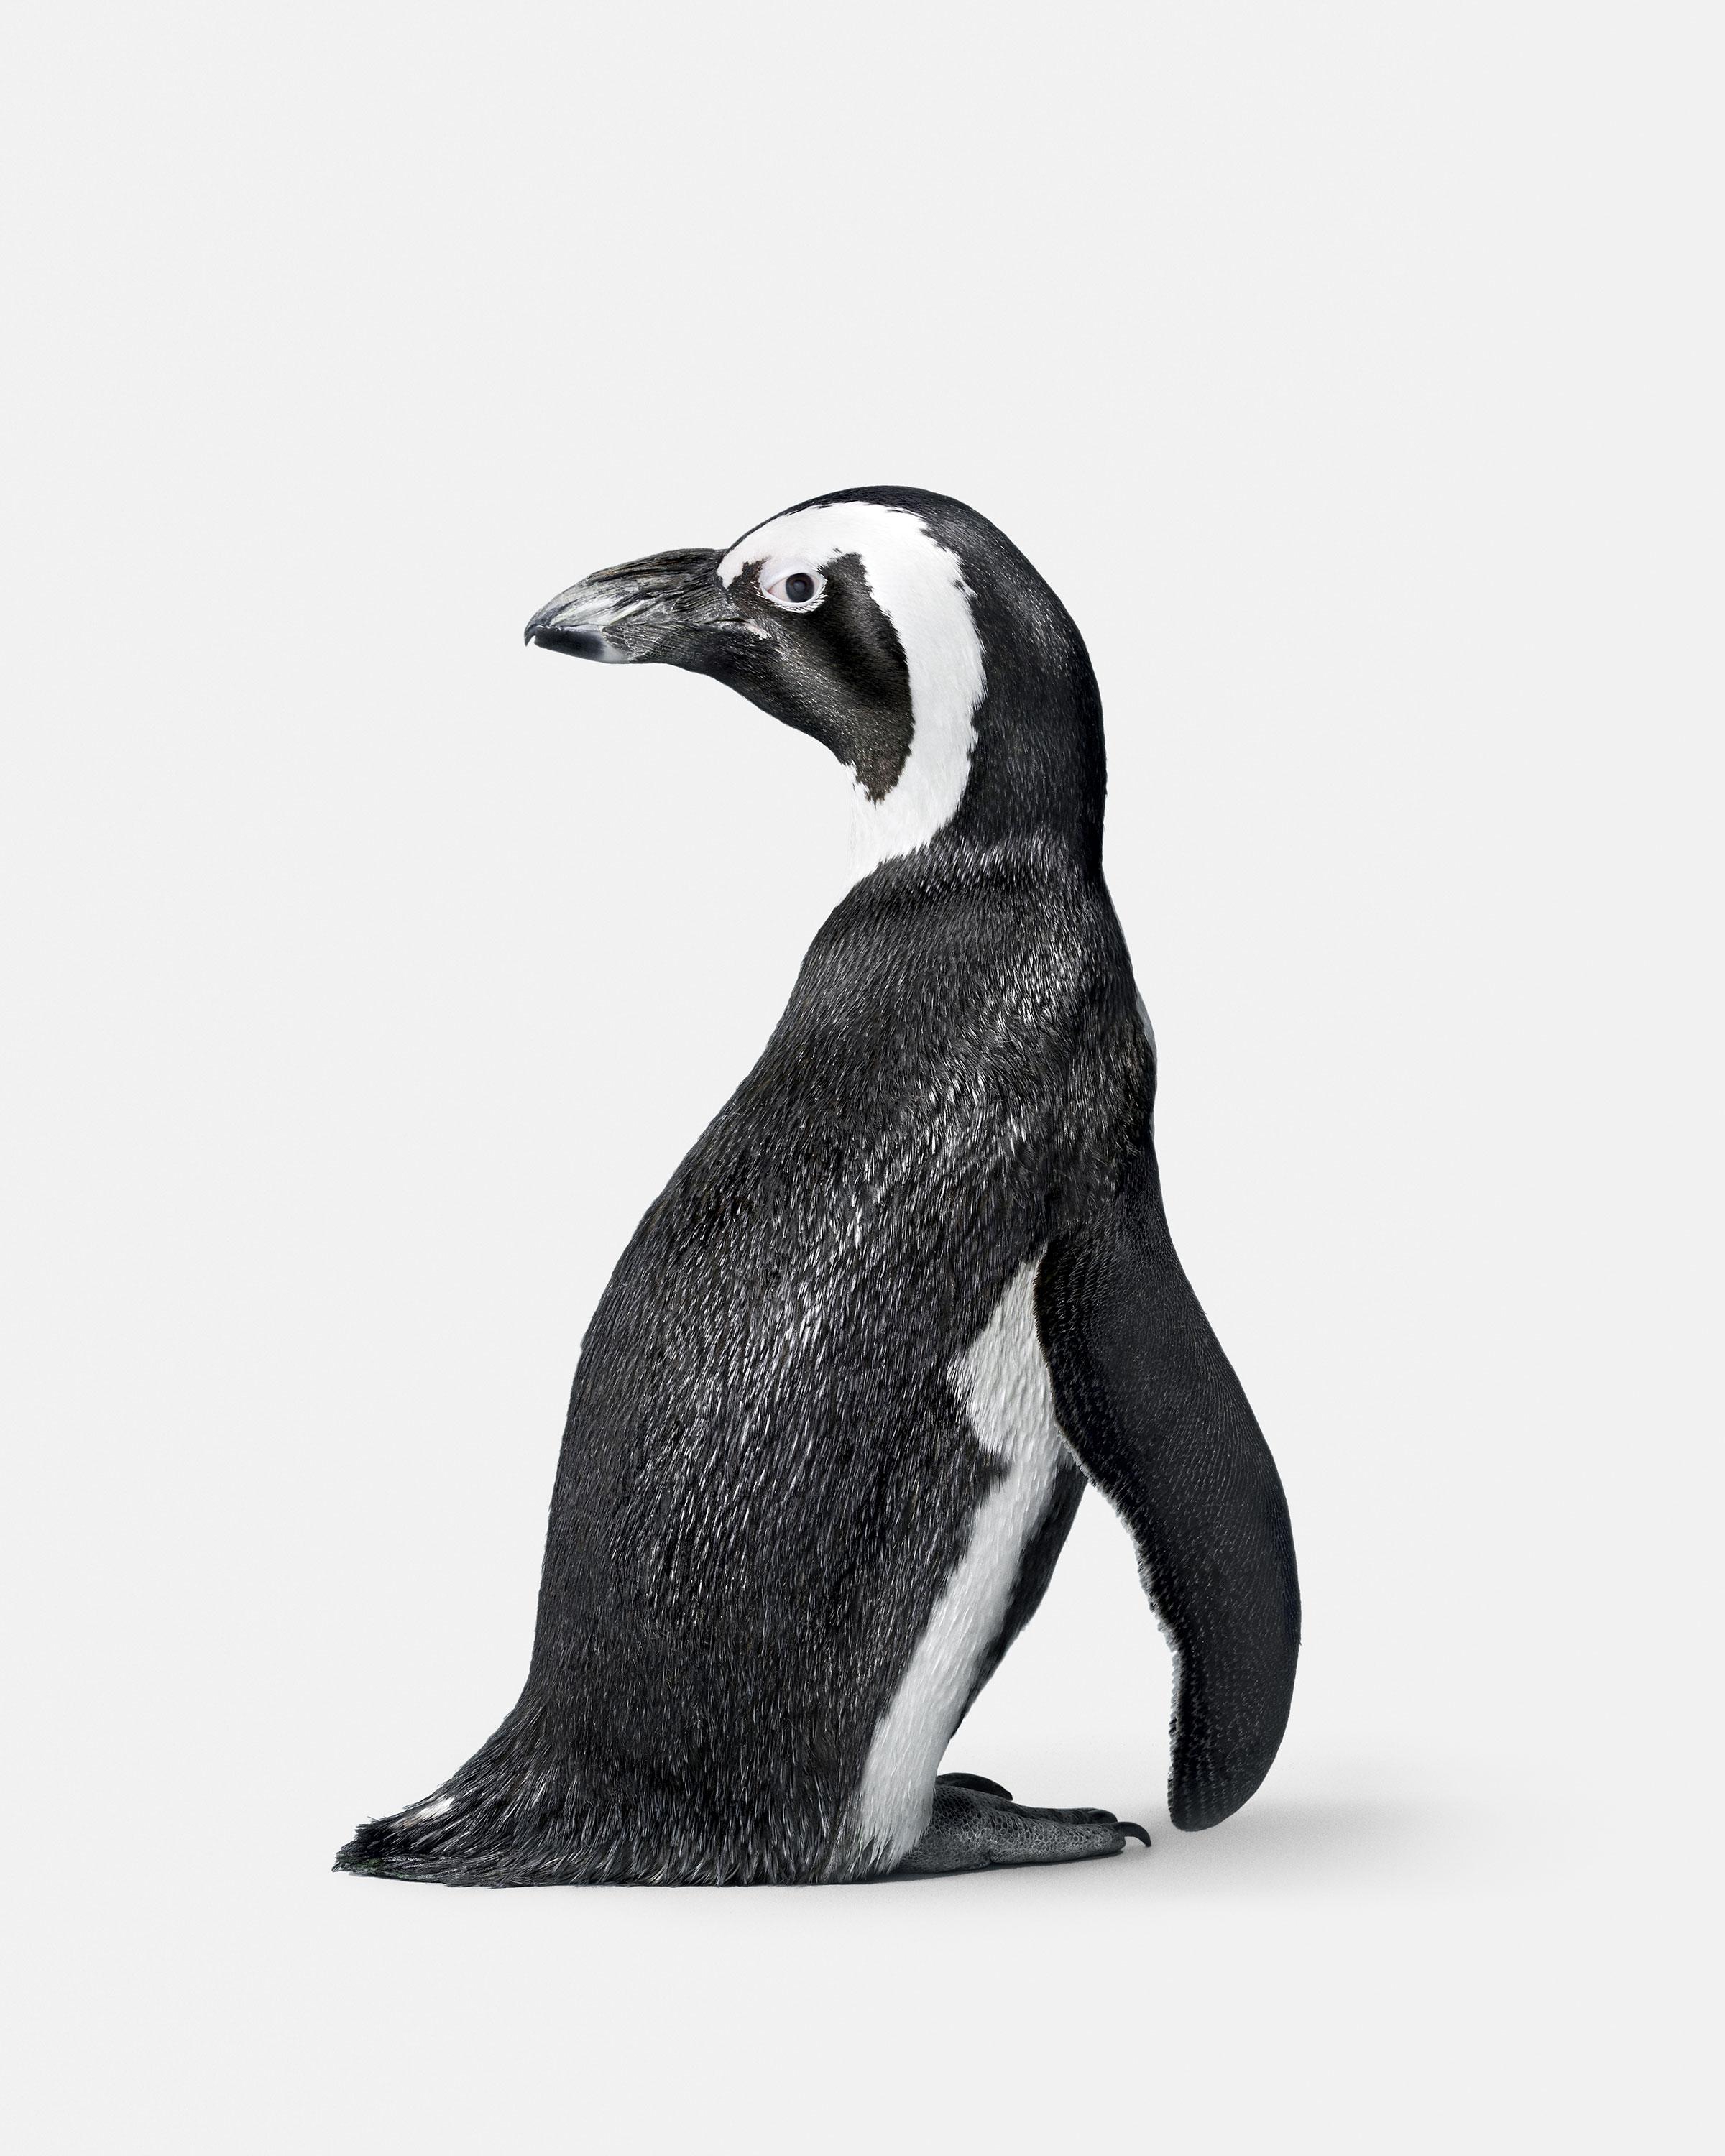 Randal Ford Animal Print - Penguin No. 2 (37.5" x 30")